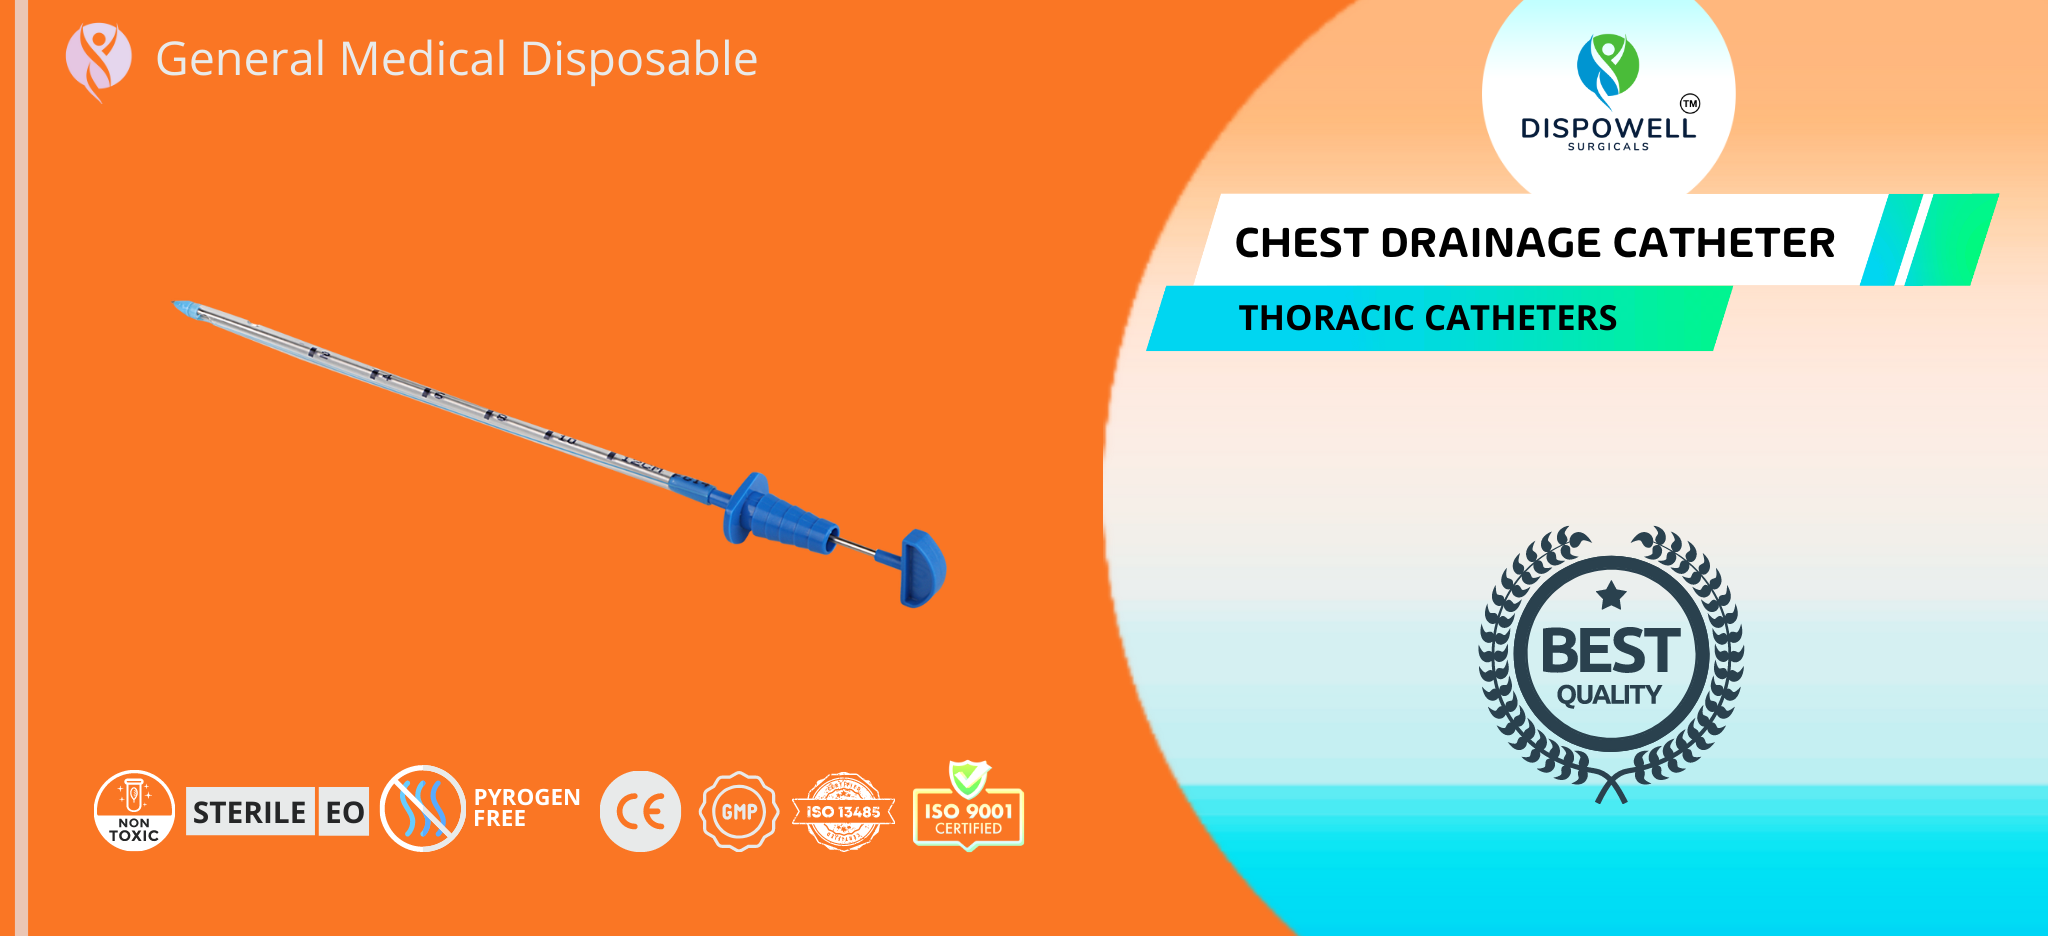 Thoracic Catheter / Chest Drainage Catheter